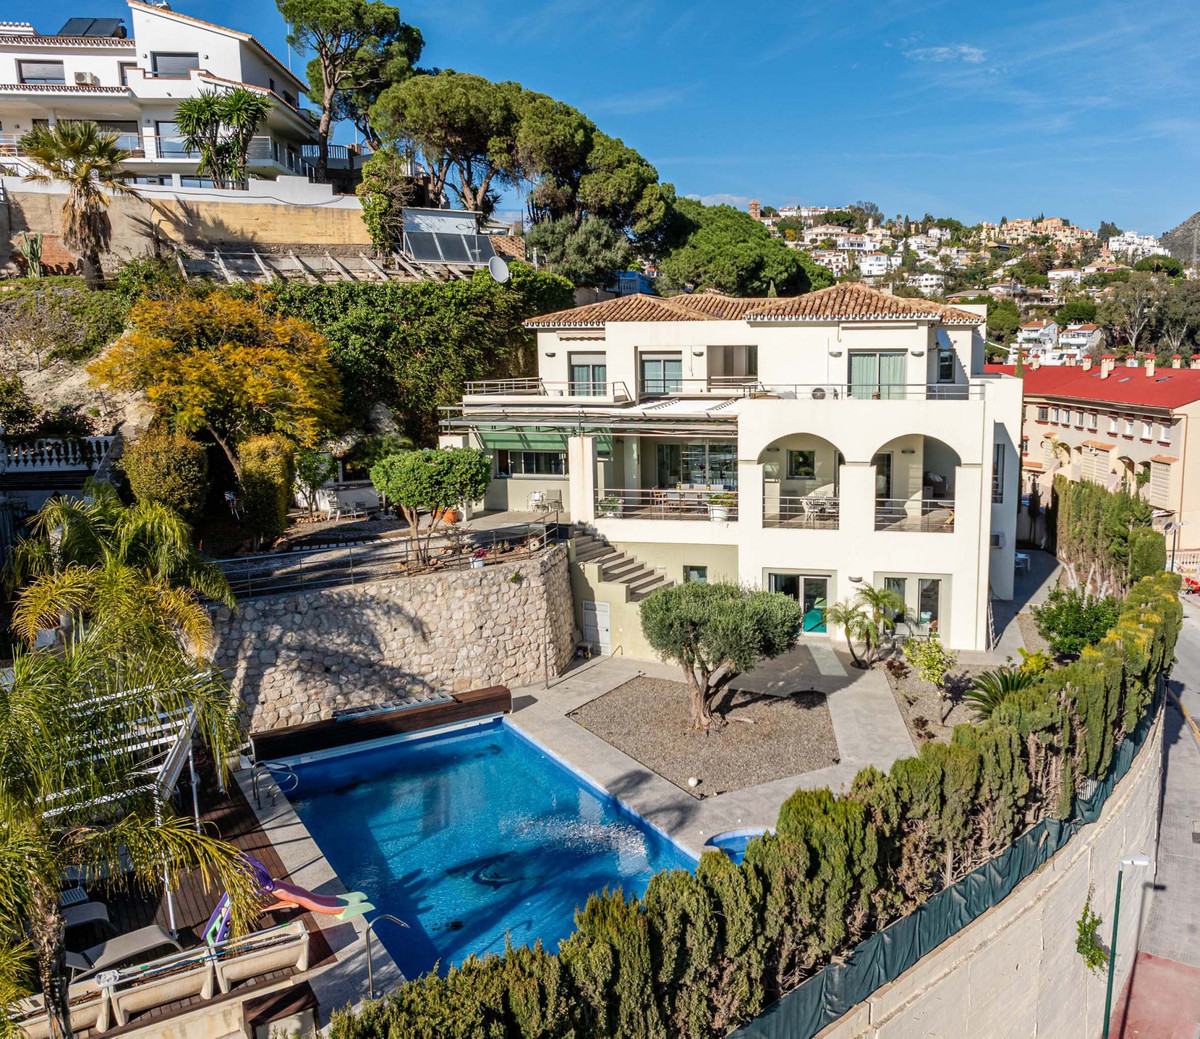 						Villa  Individuelle
													en vente 
																			 à Malaga Este
					